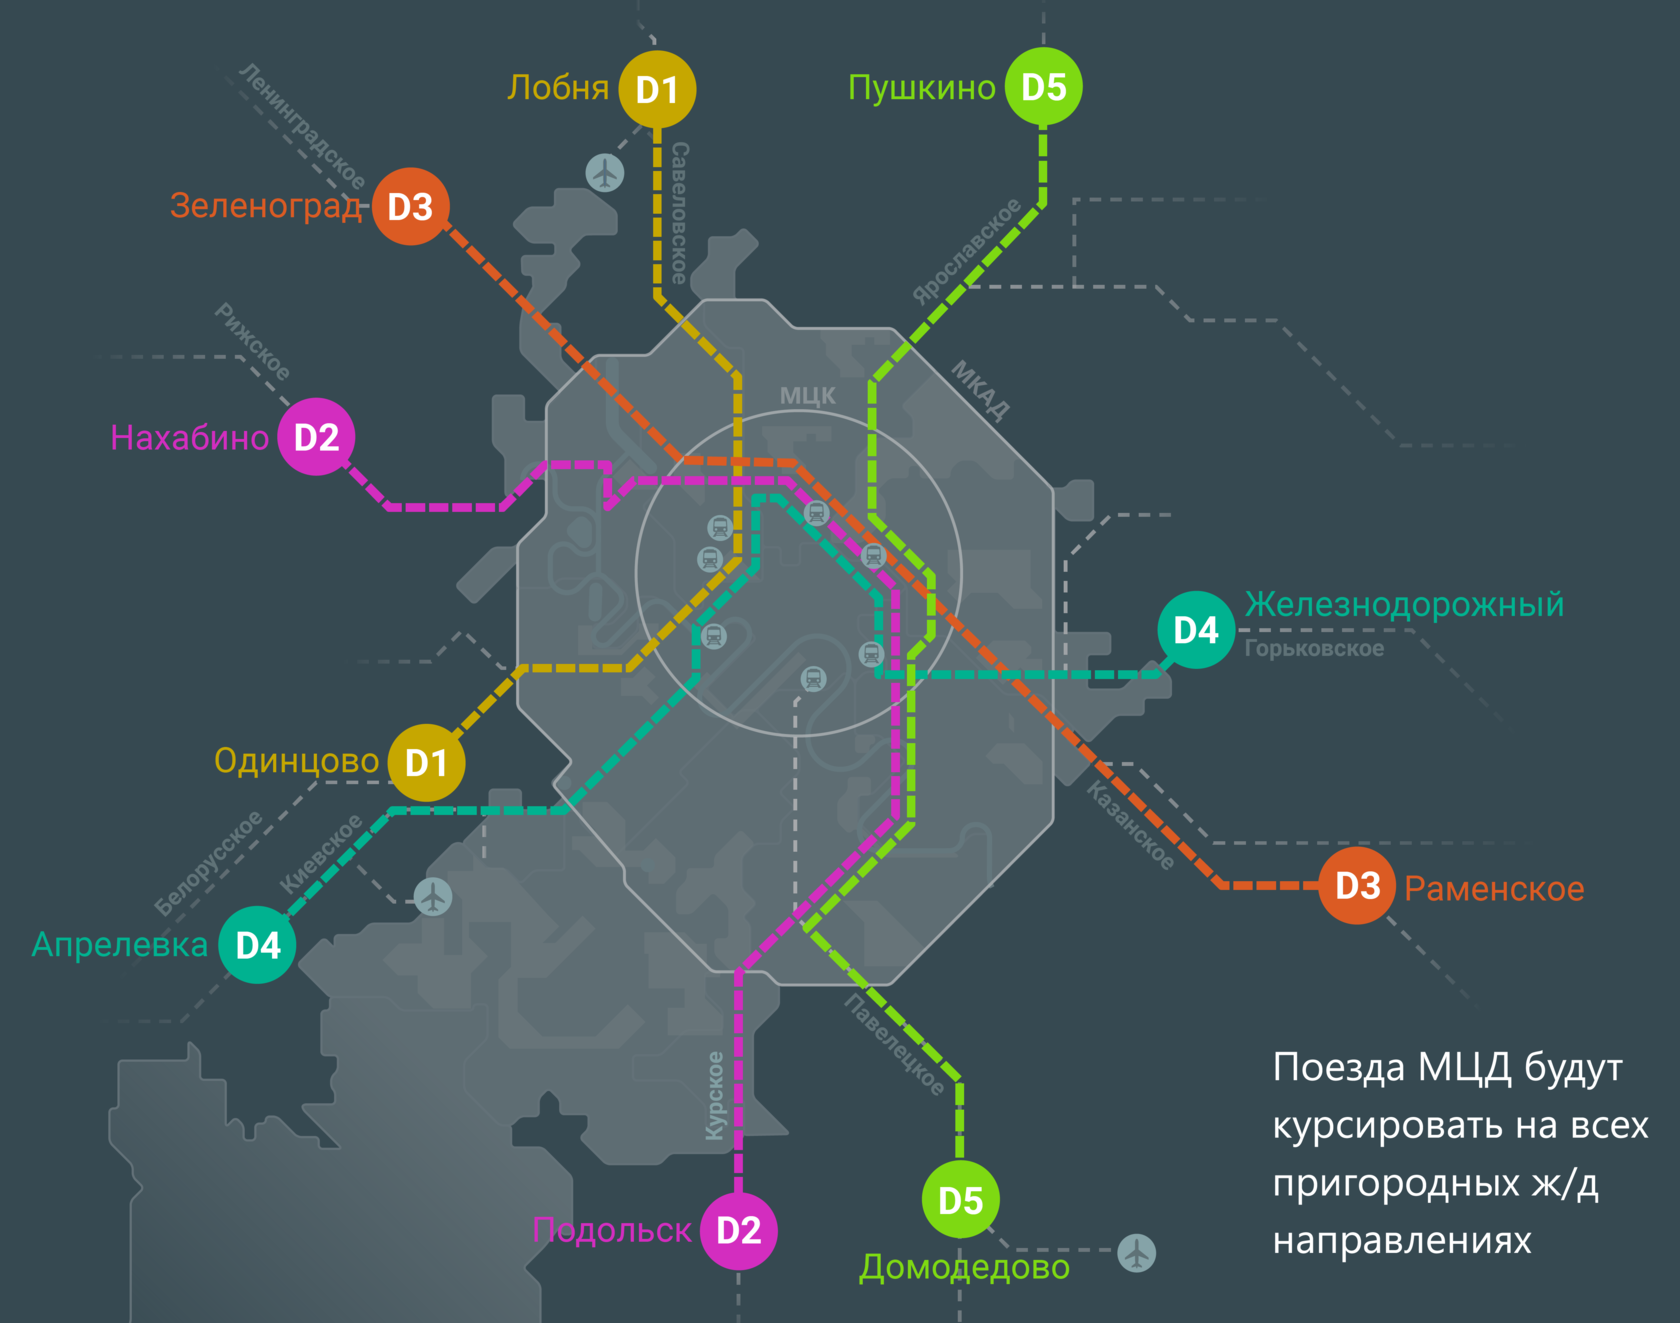 Метрополитен москва схема 2024 год. МЦД 2025 схема станций. Схема МЦД Москвы 2022. Карта МЦД 2025. Схема МЦД Москвы 2021.